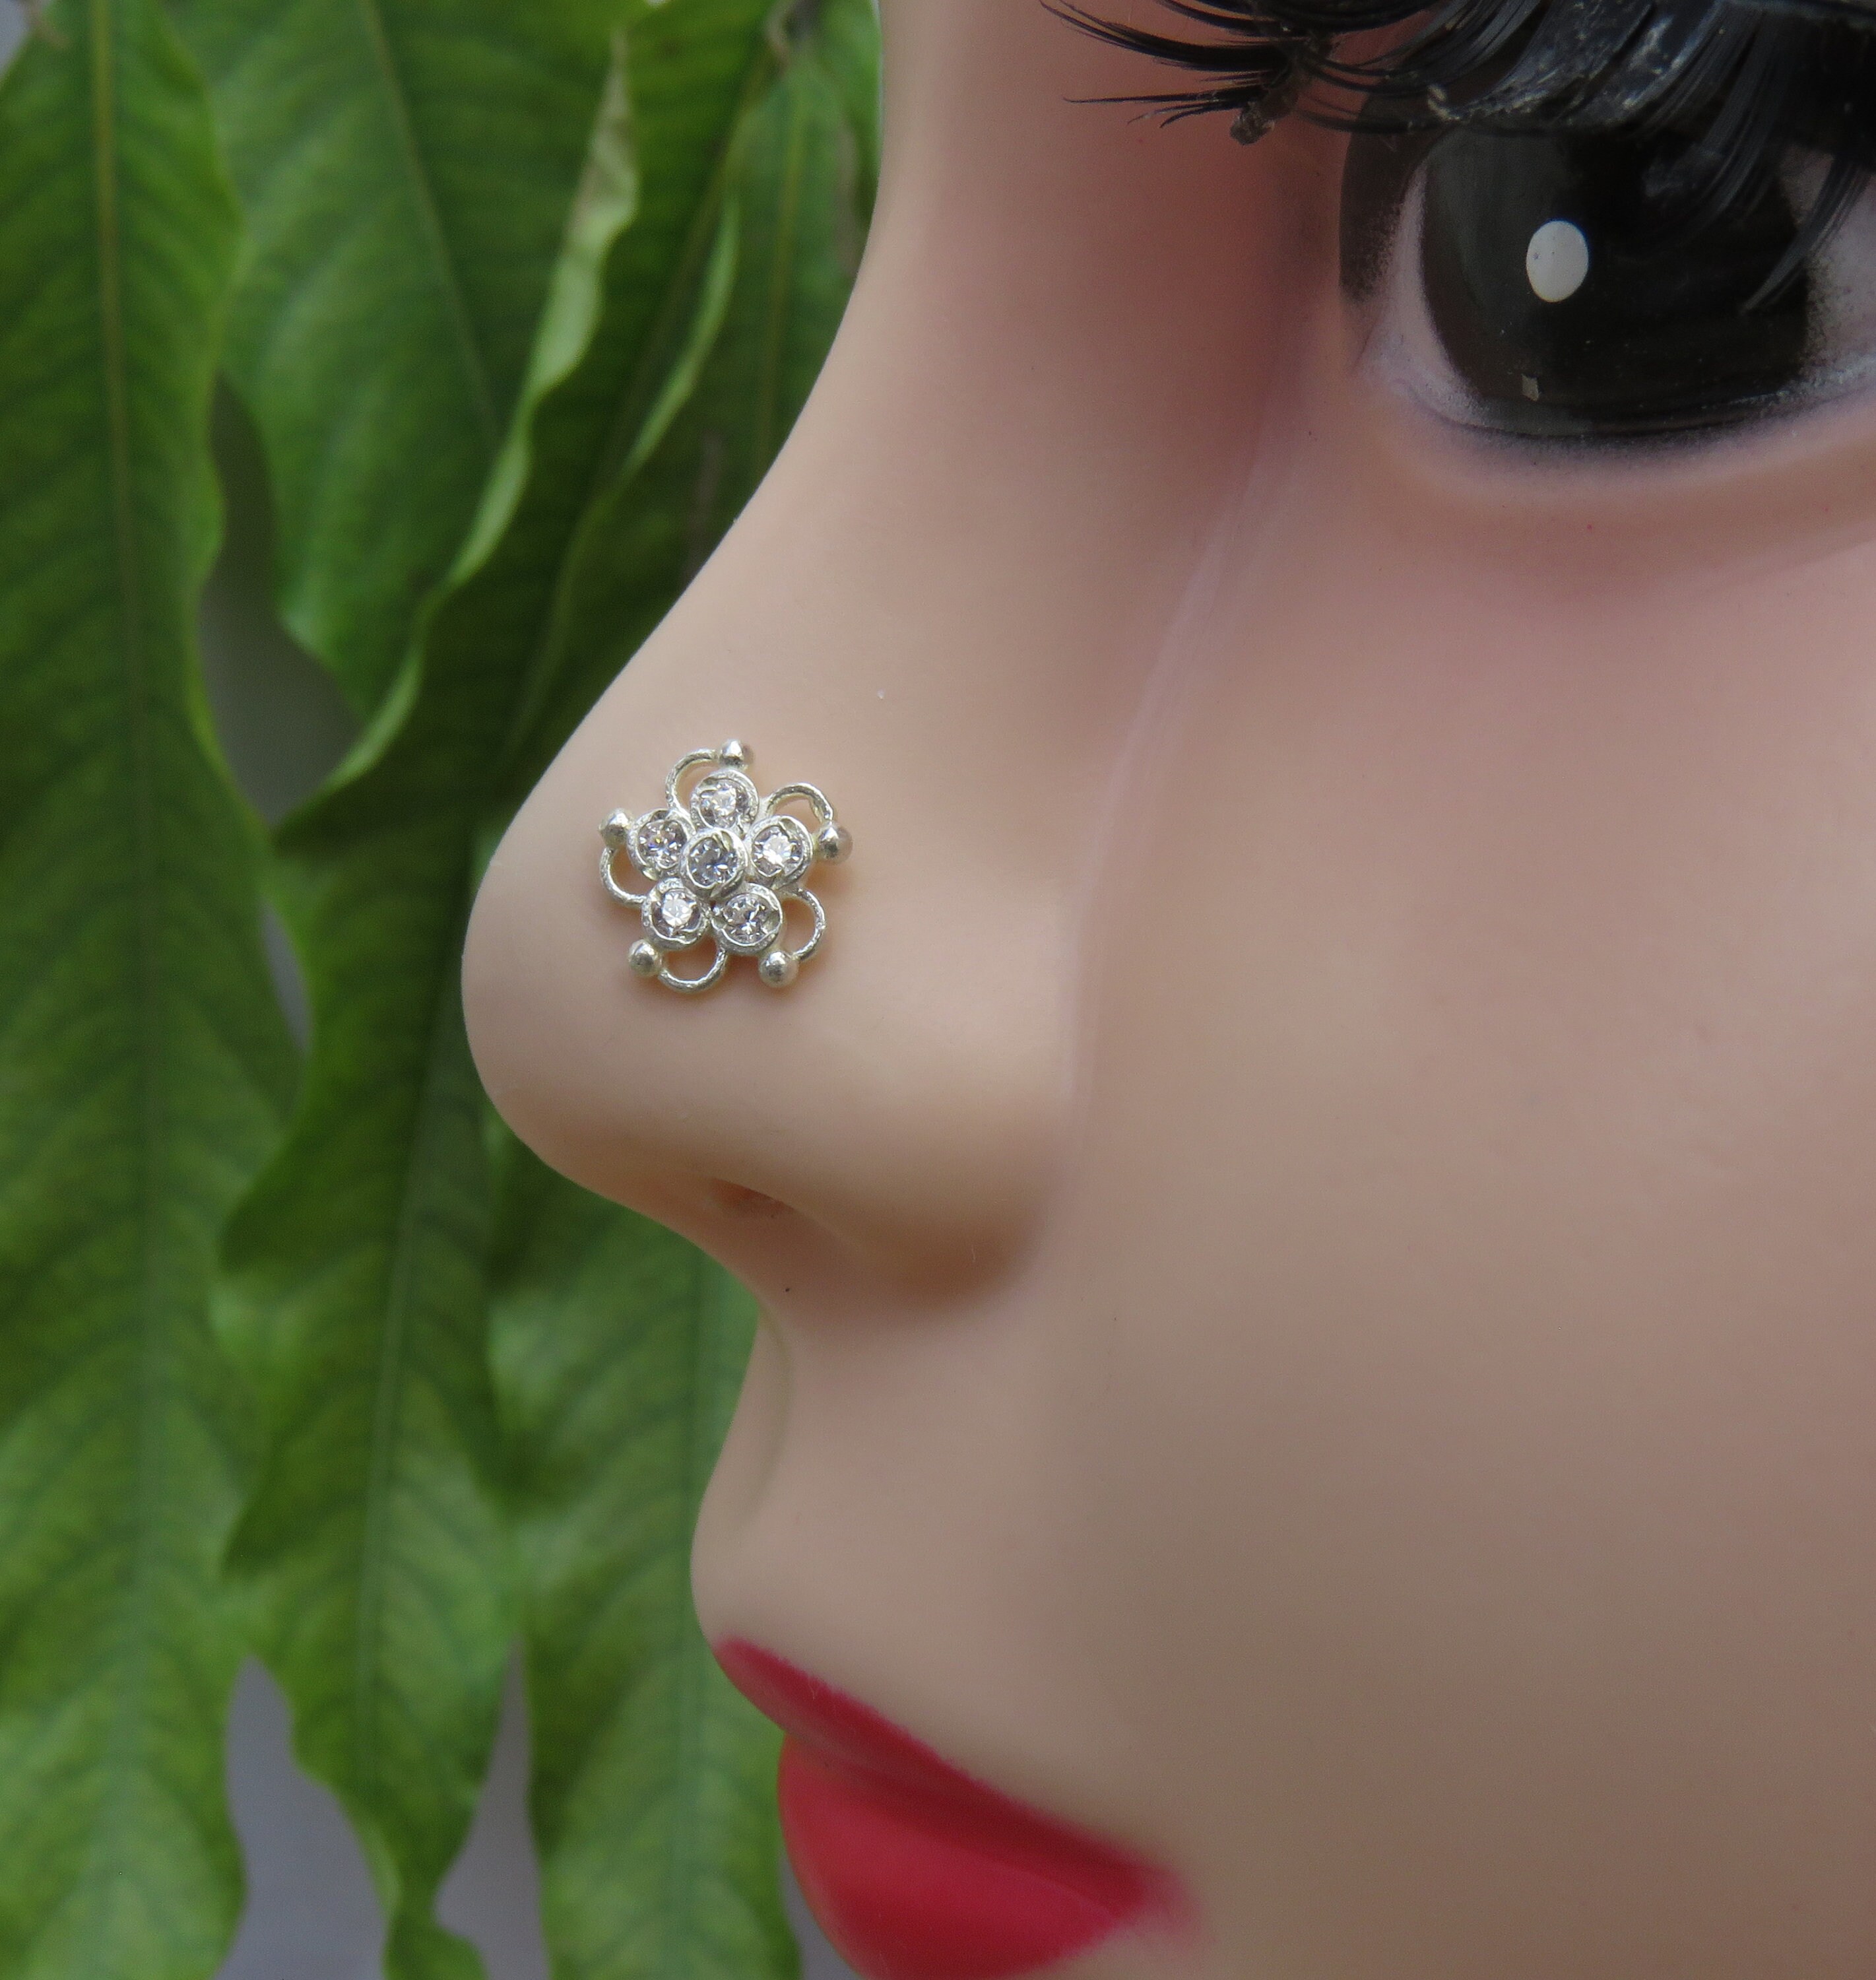 Genuine Diamond Flower Nose Piercing 14k Gold Ear Nose Floral Body Piercing.  | eBay